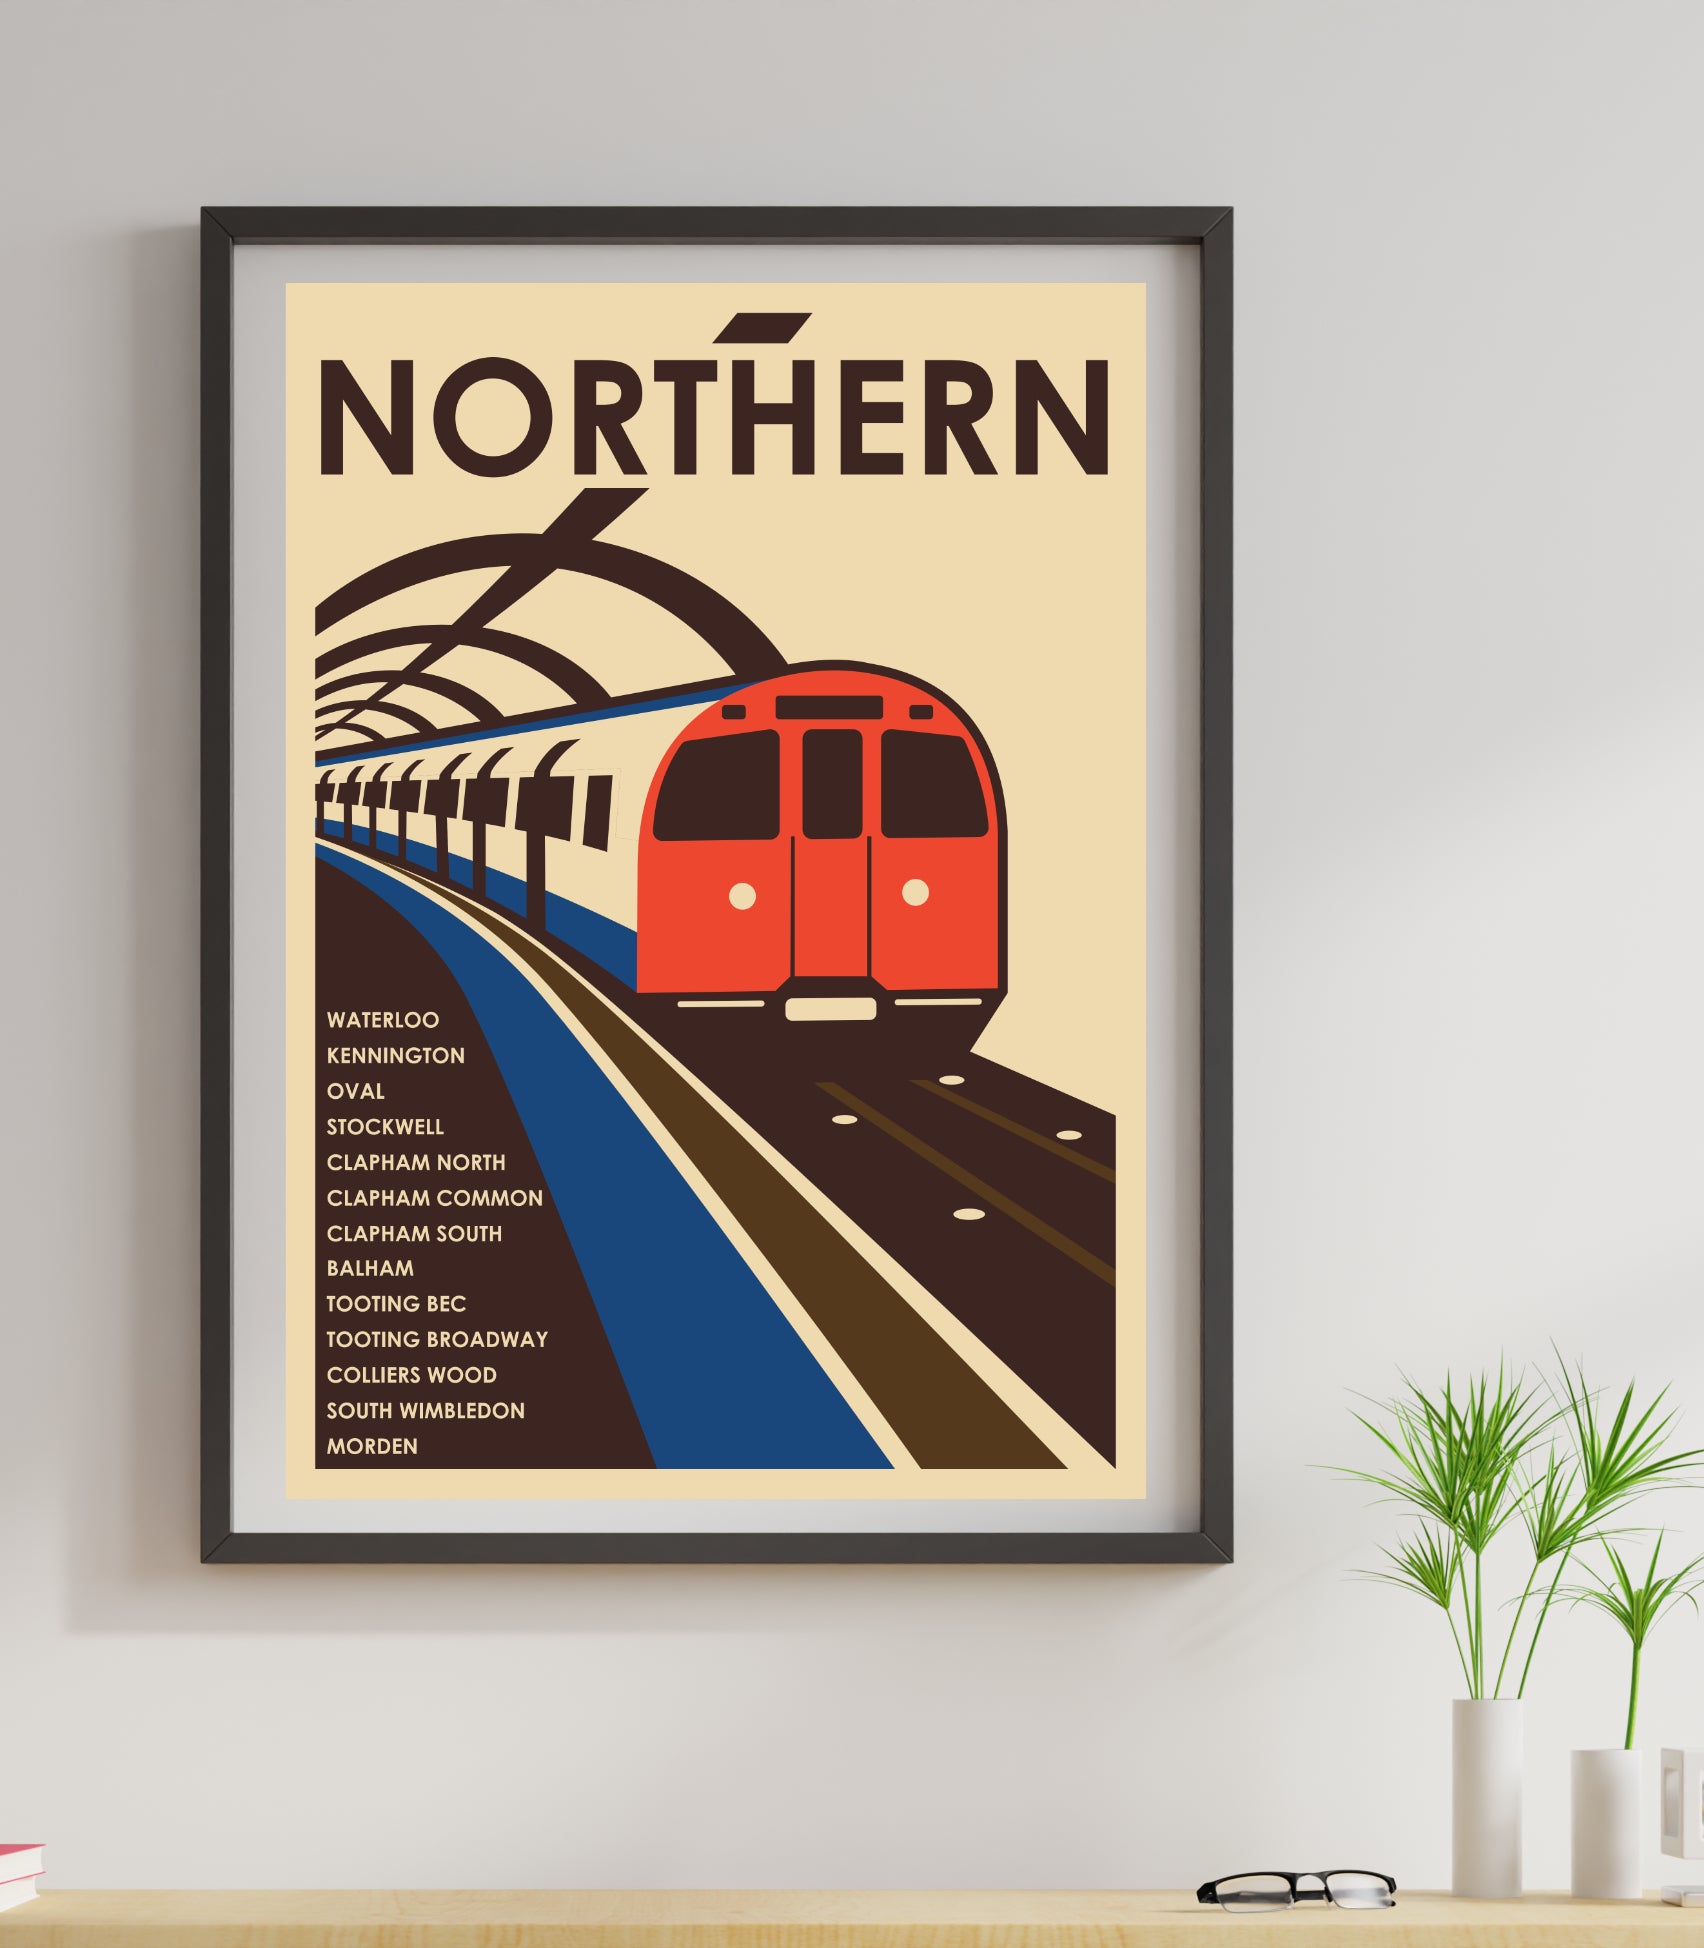 Northern Line (South), London Underground Tube vintage travel print poster, home decor